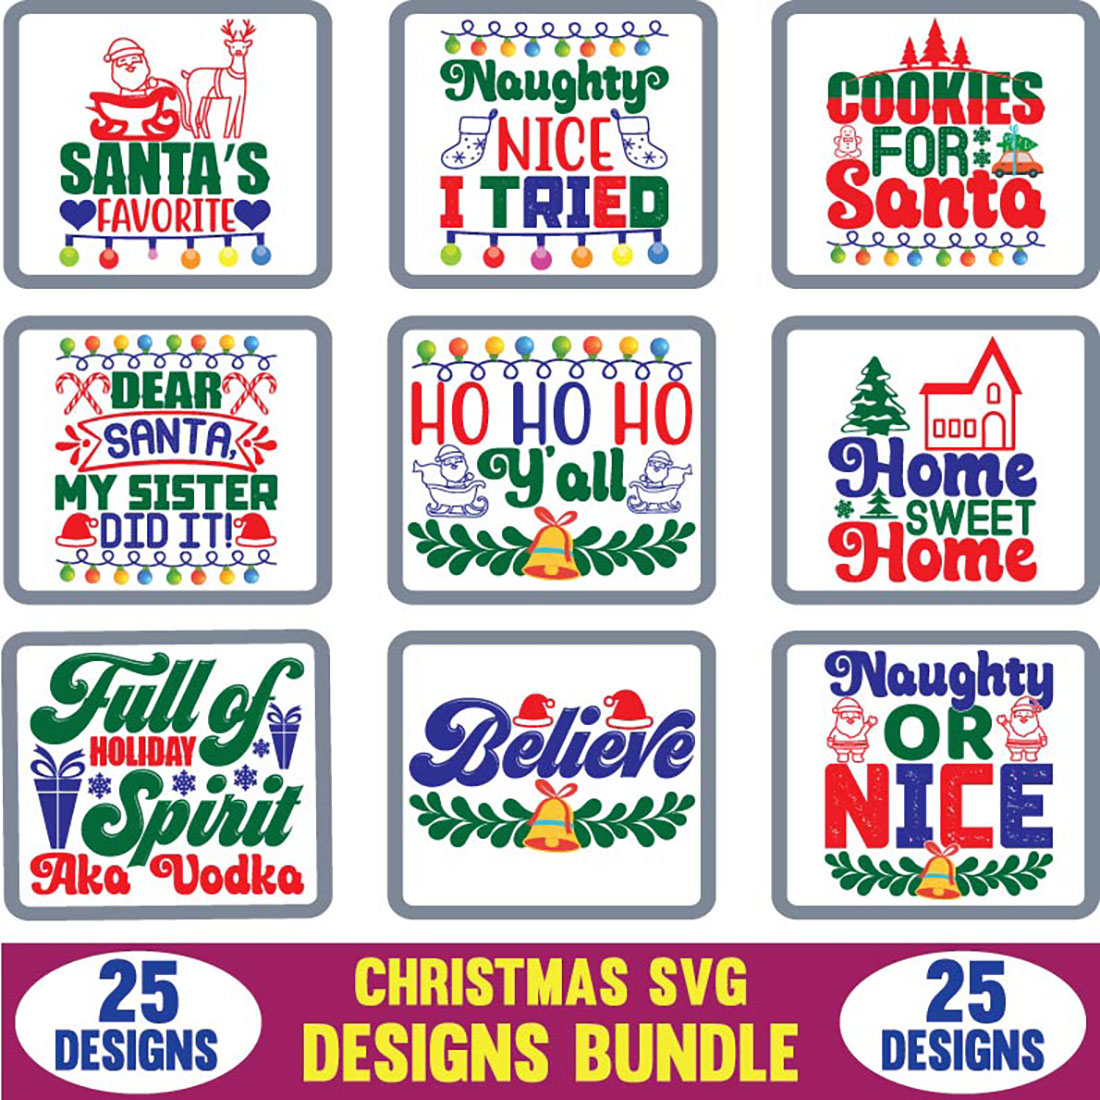 Christmas SVG Designs Bundle image preview.